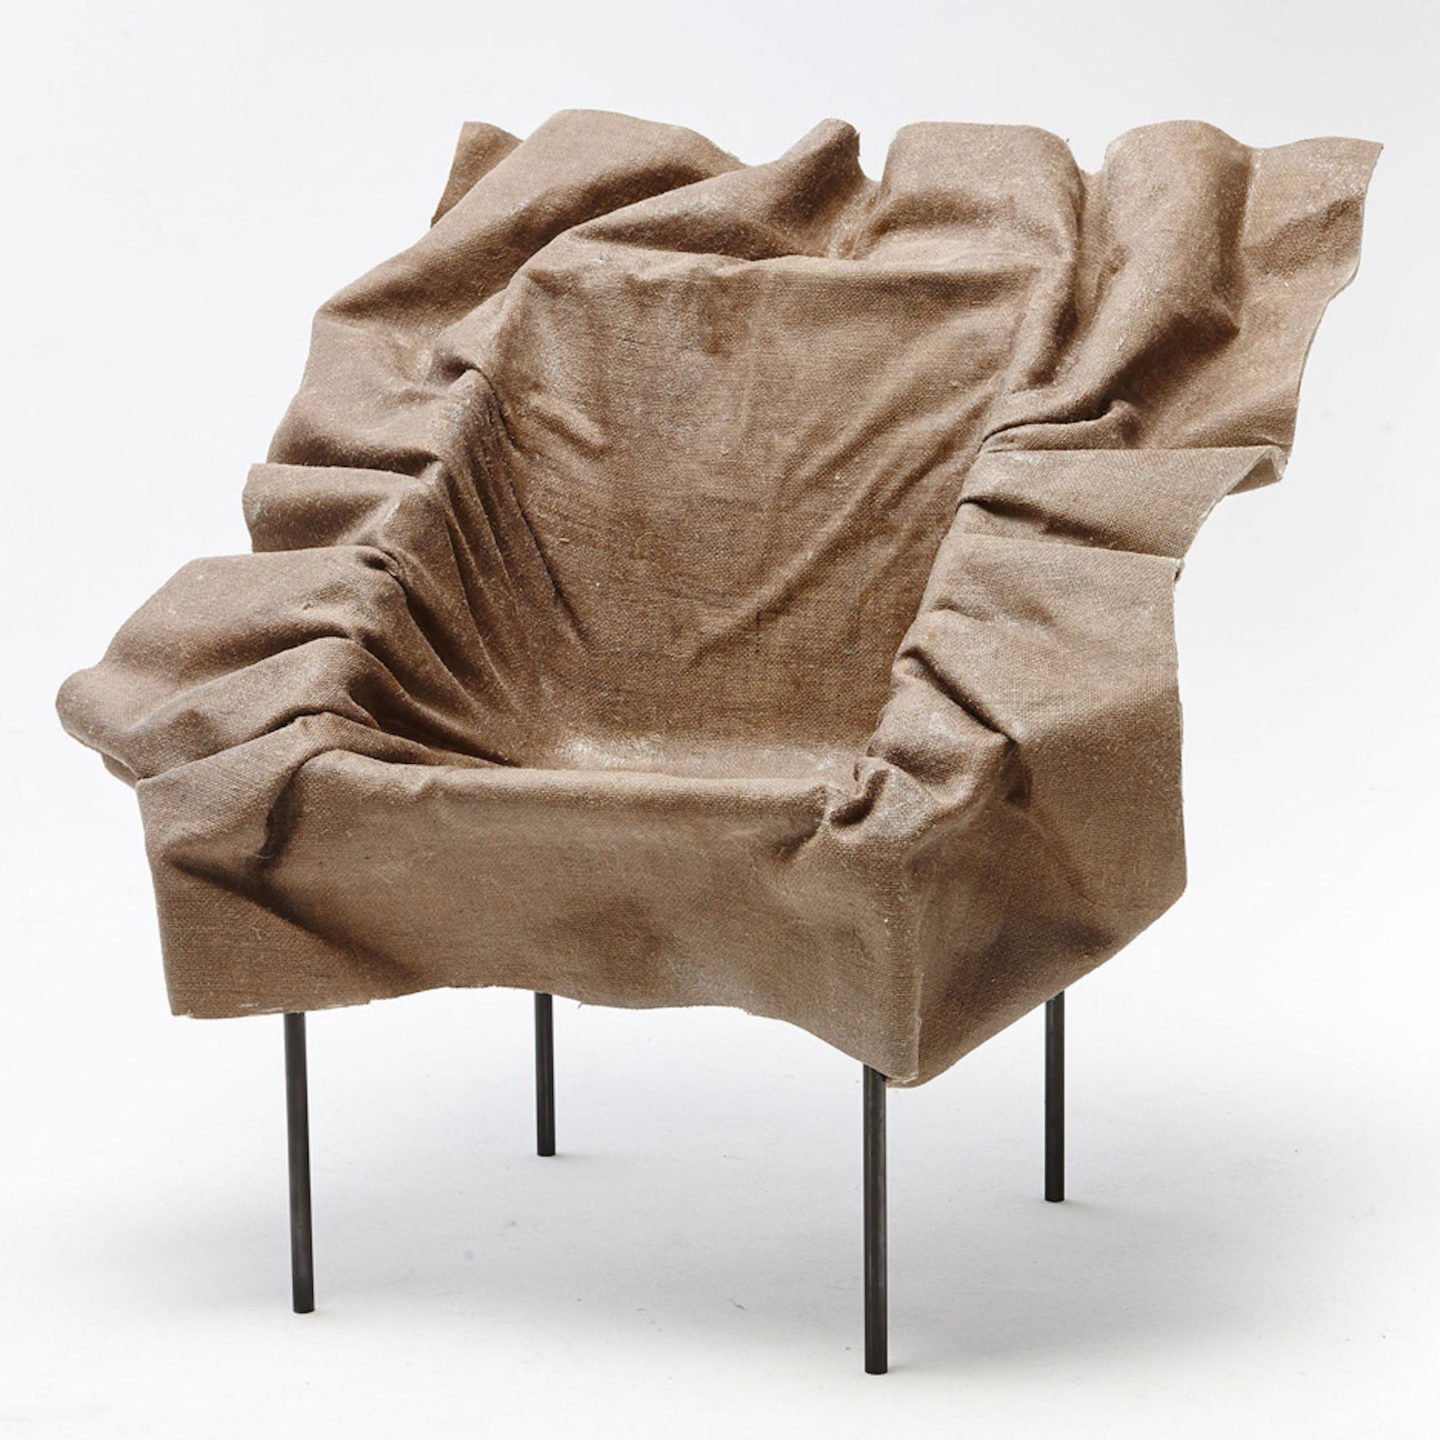 iGNANT-Design-Demeter-Fogarasi-Poetic-Furniture-Frozen-Textiles-07